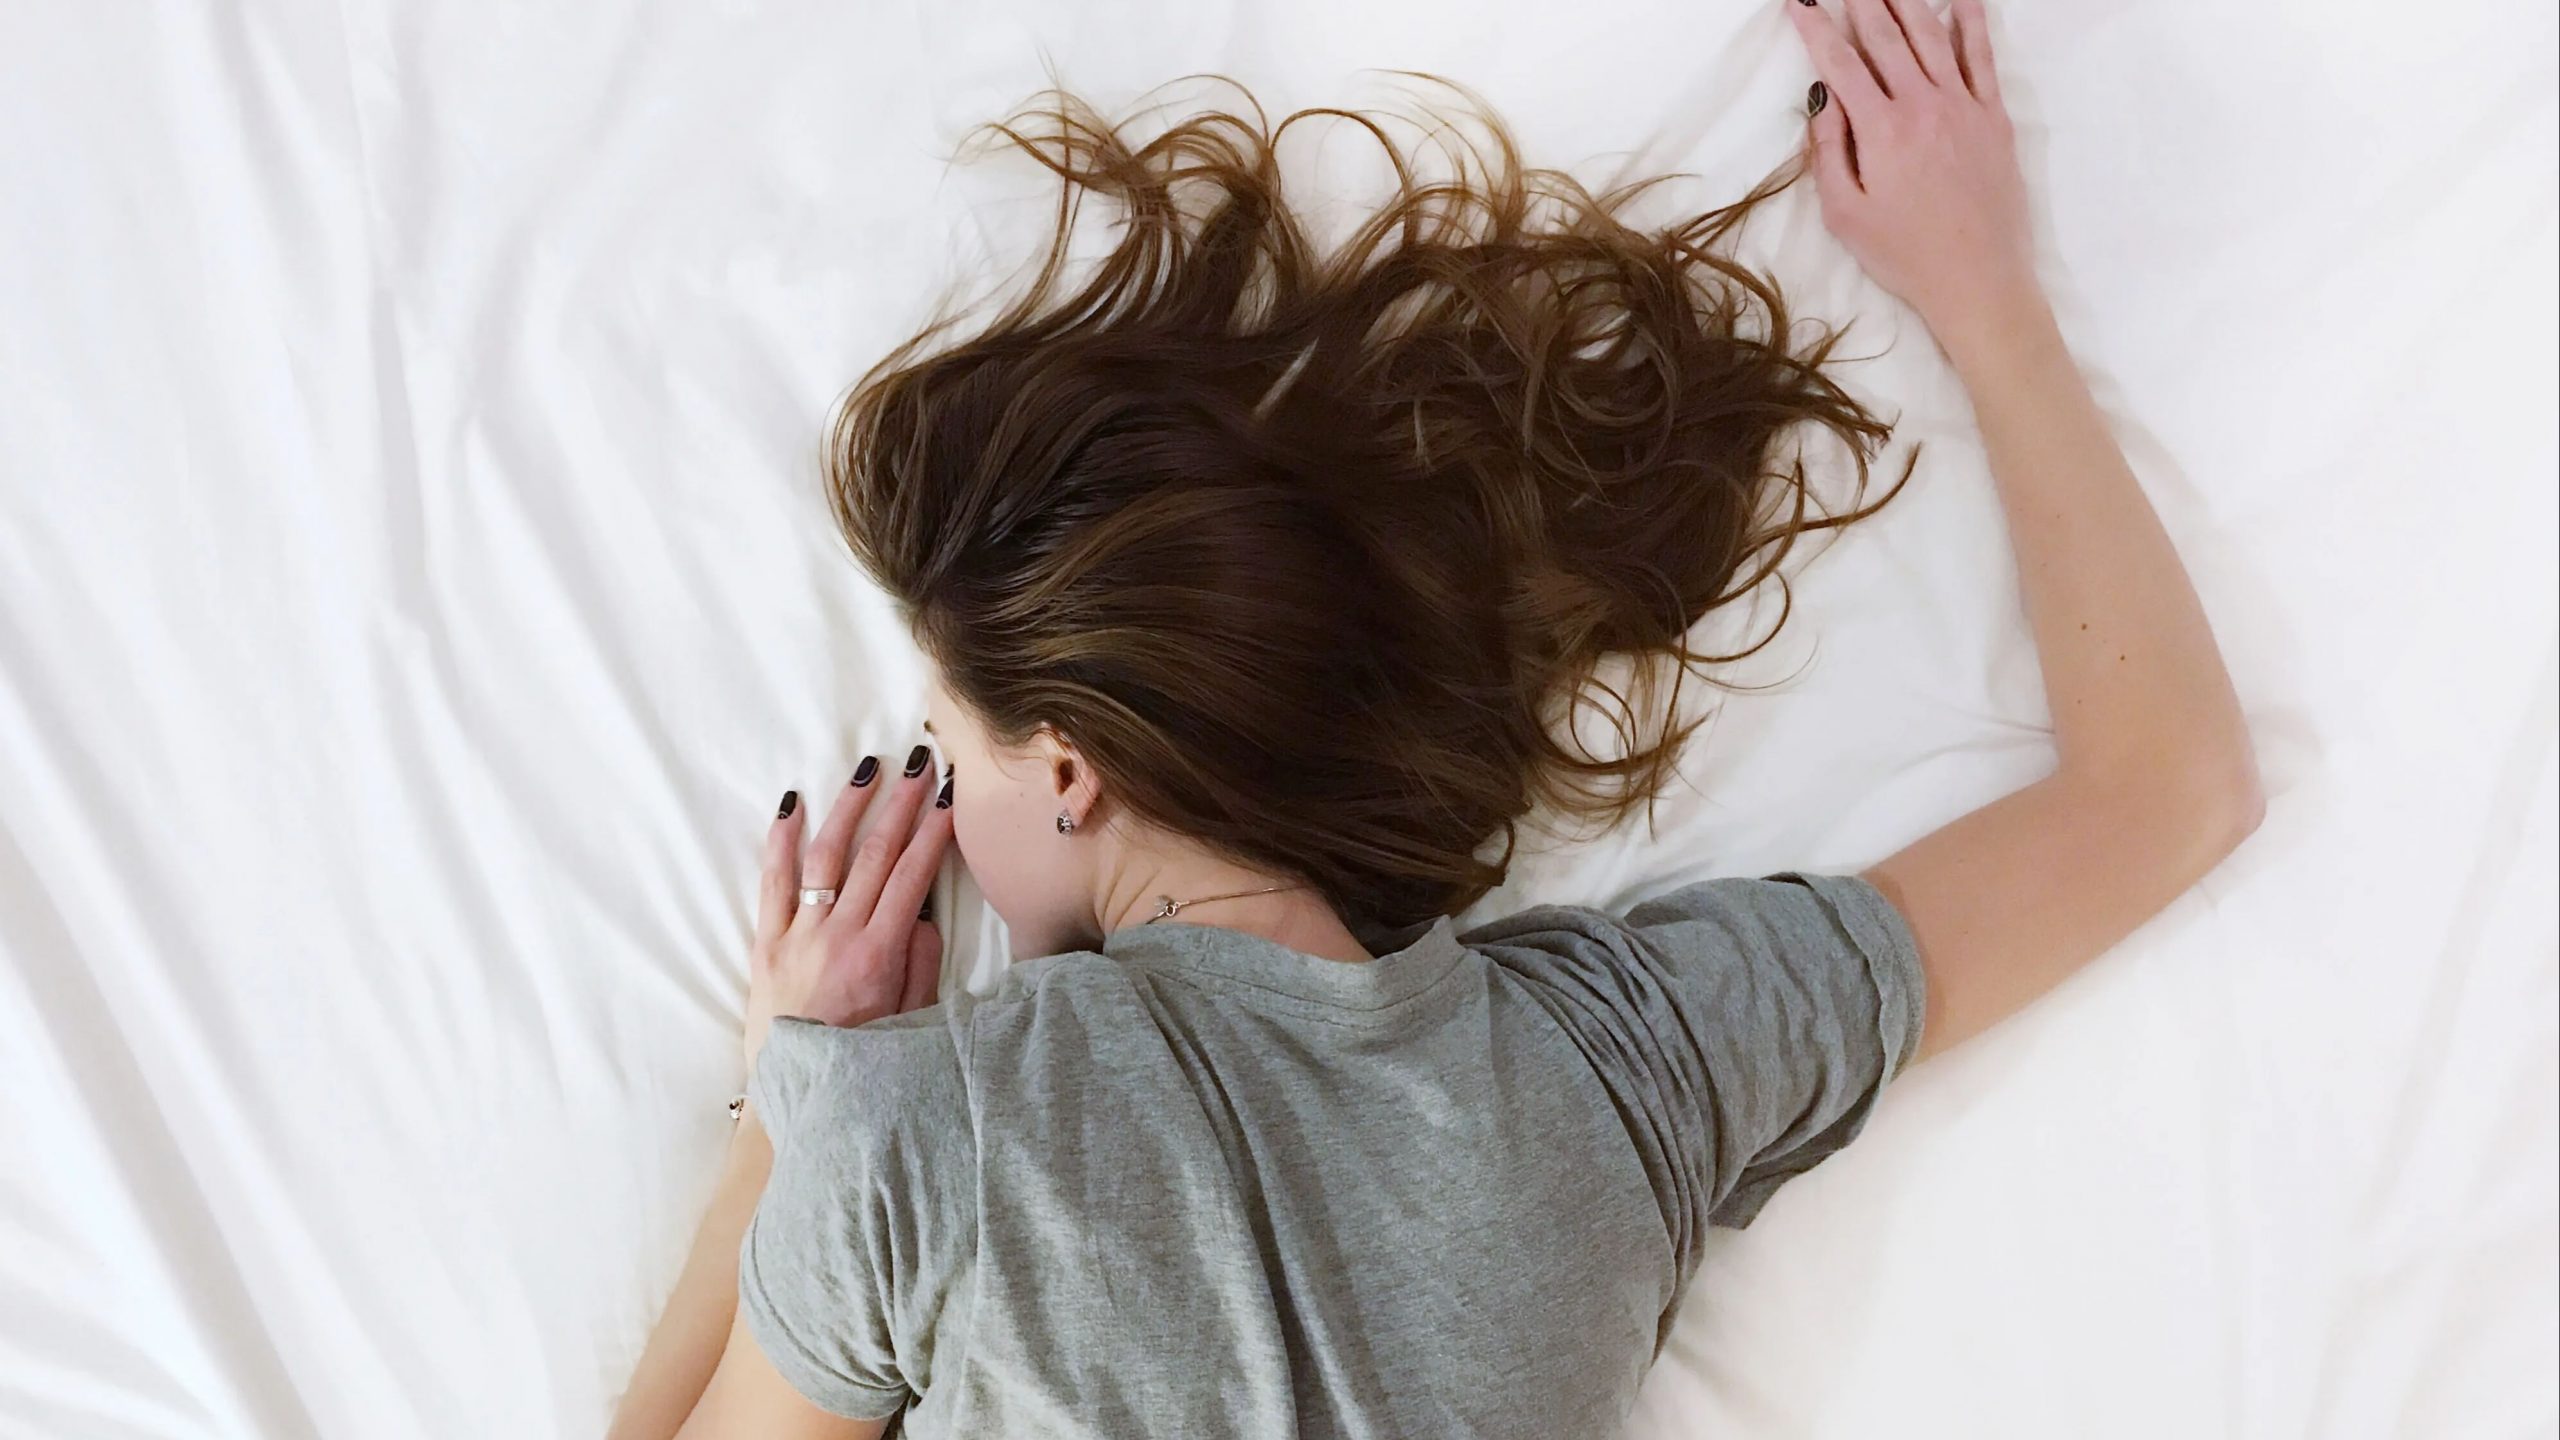 Irregular working hours causing sleep disorder? Make it work with these basic steps